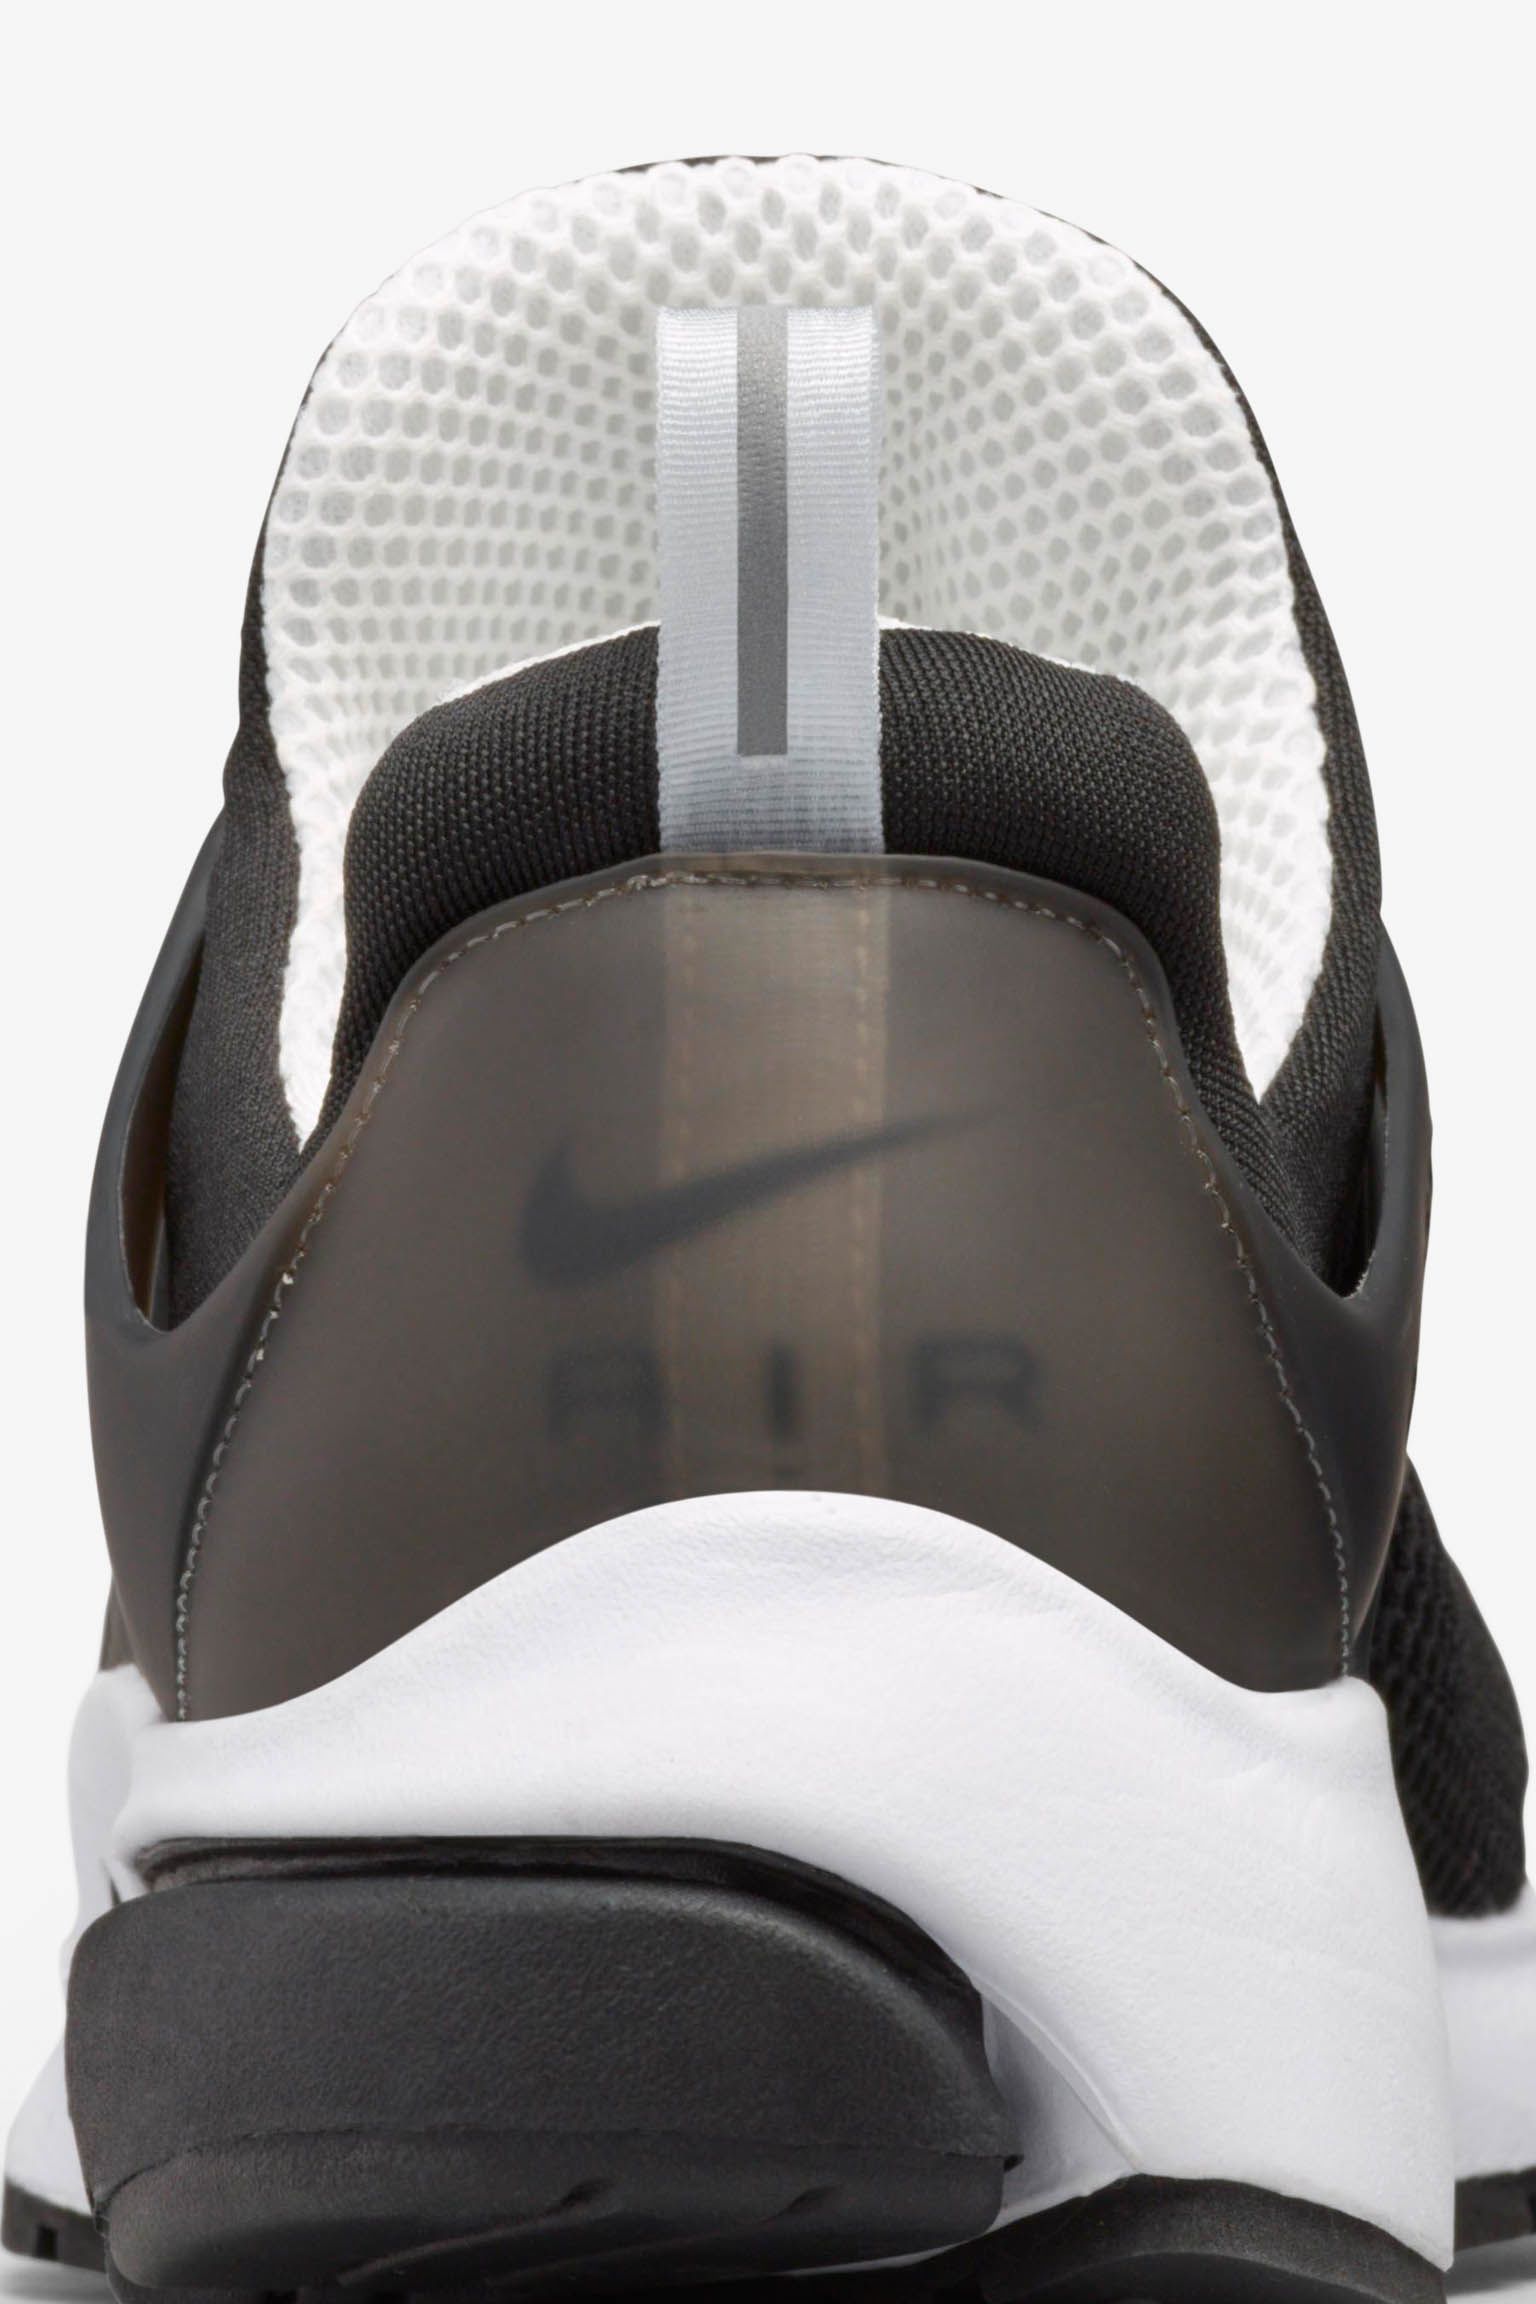 Nike Air Presto 'Black White' Release Date. SNKRS